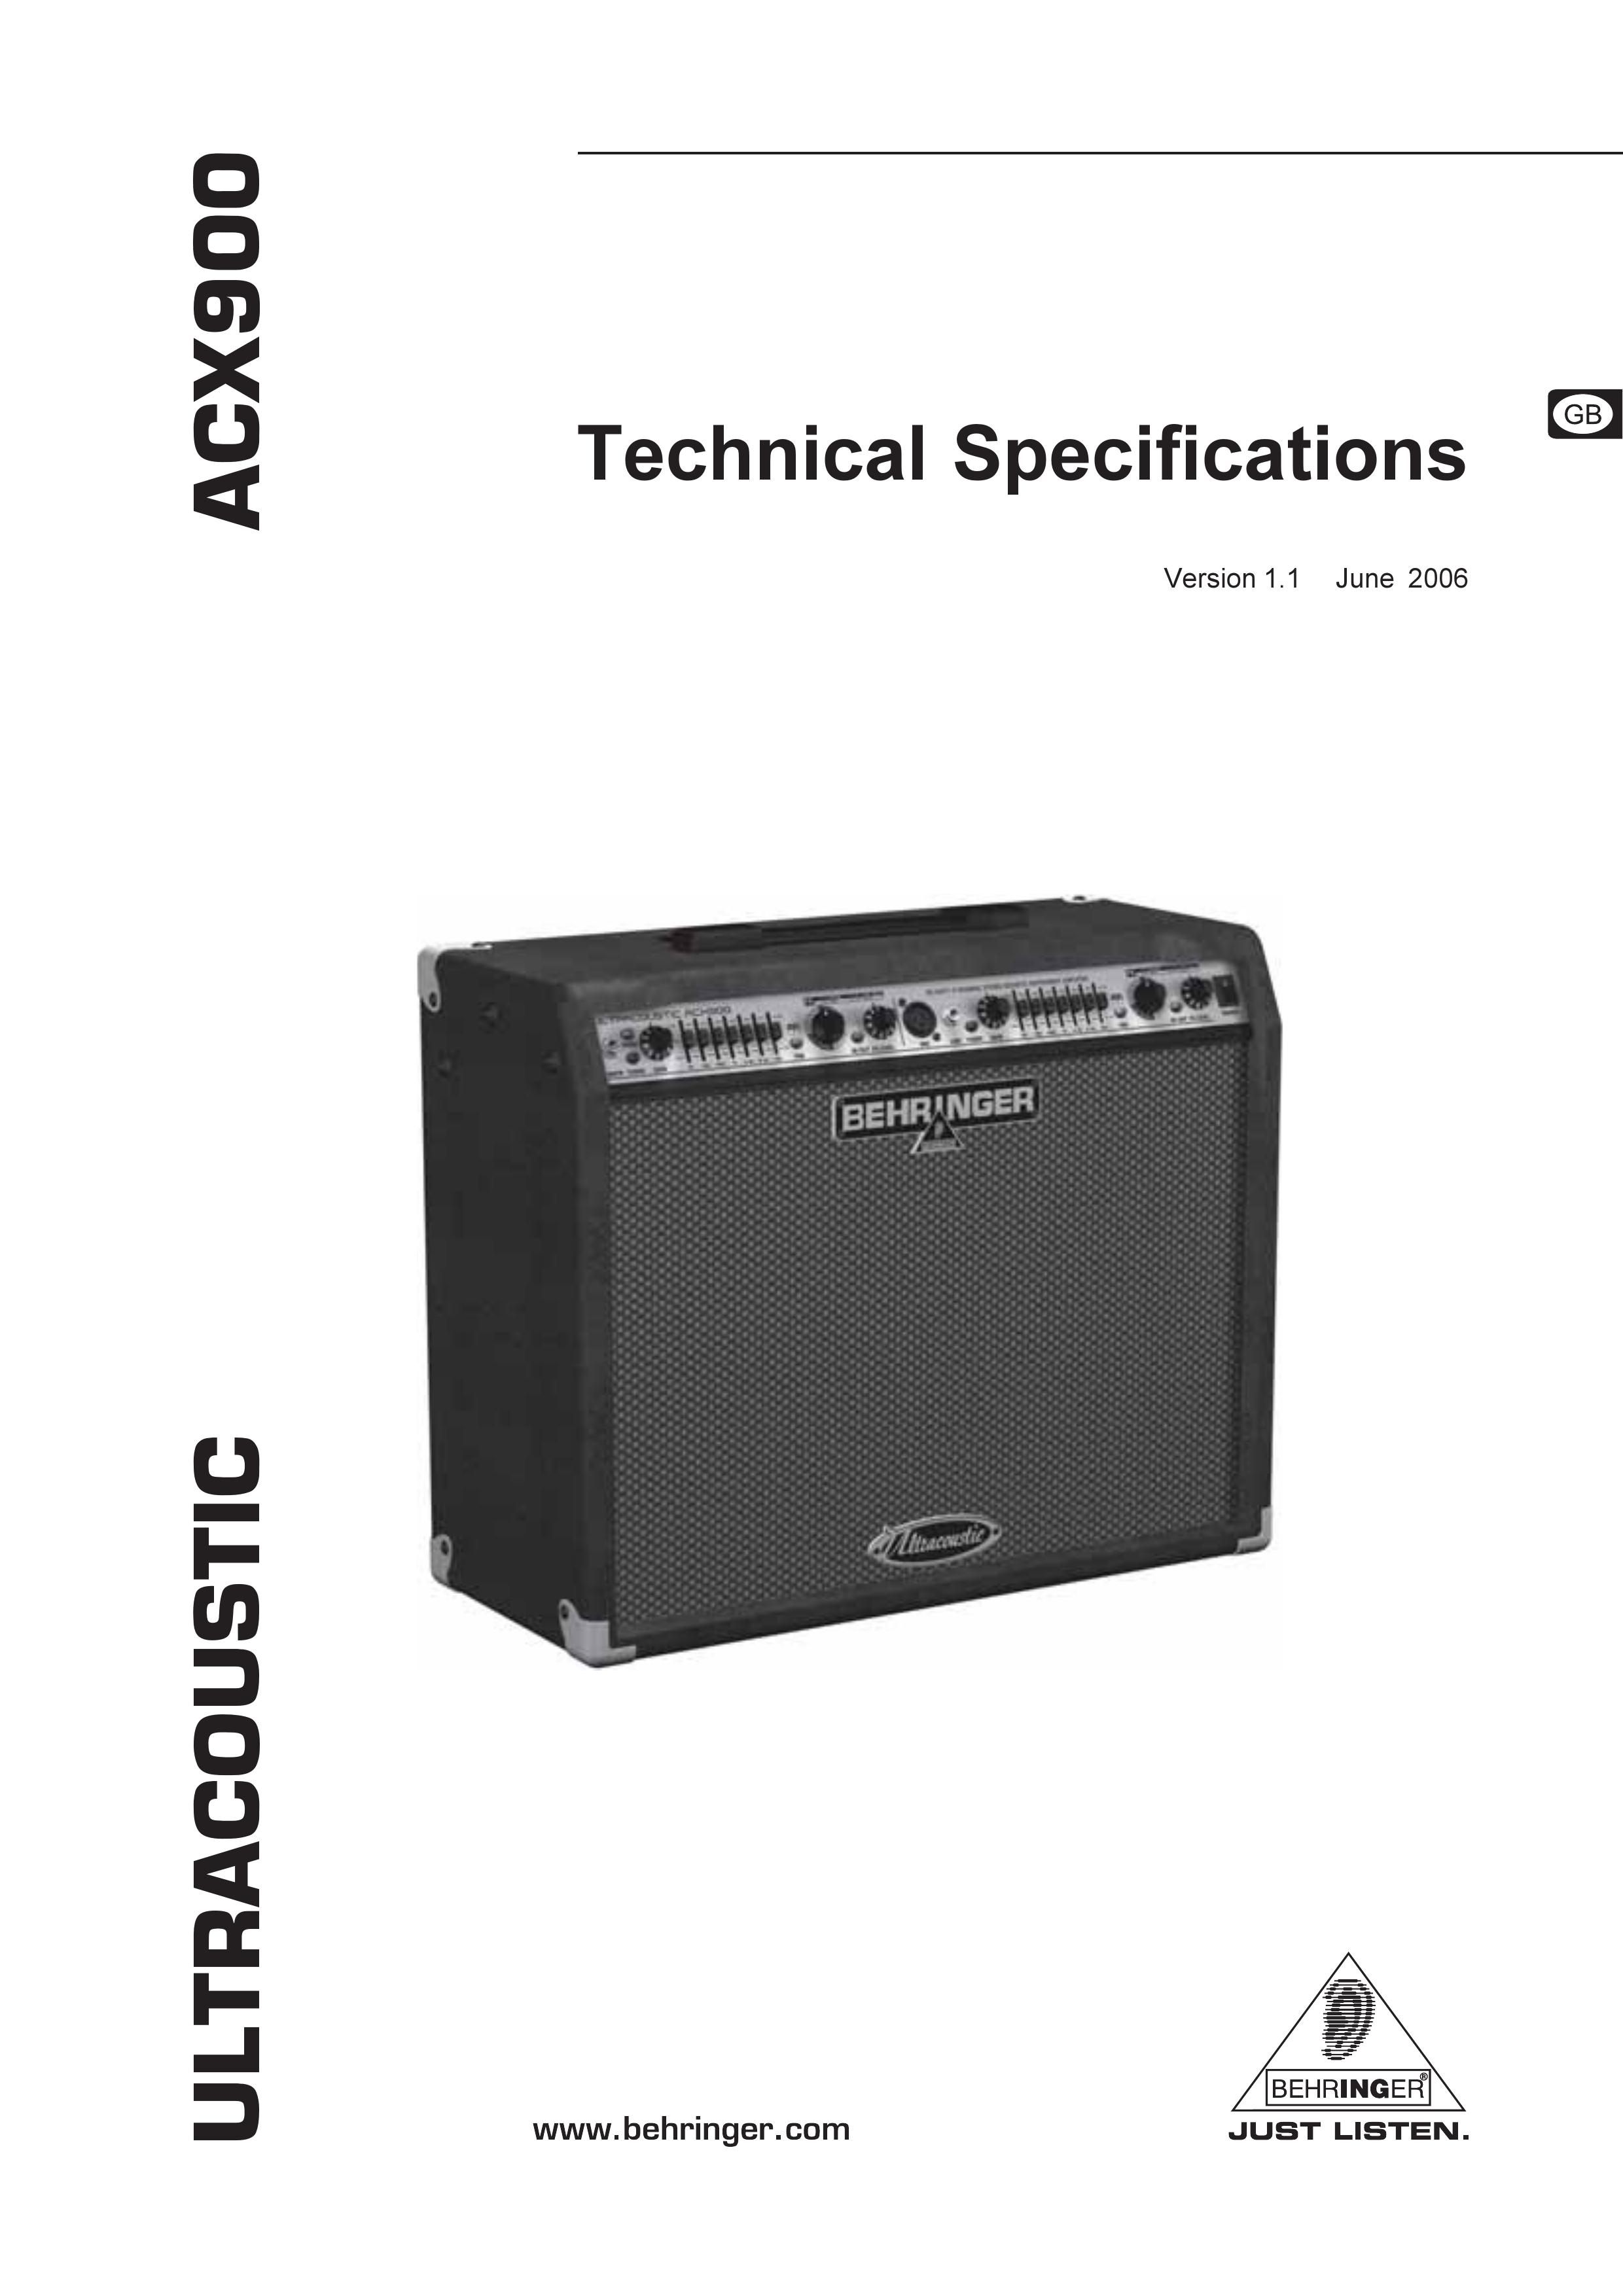 Behringer ACX900 Musical Instrument Amplifier User Manual